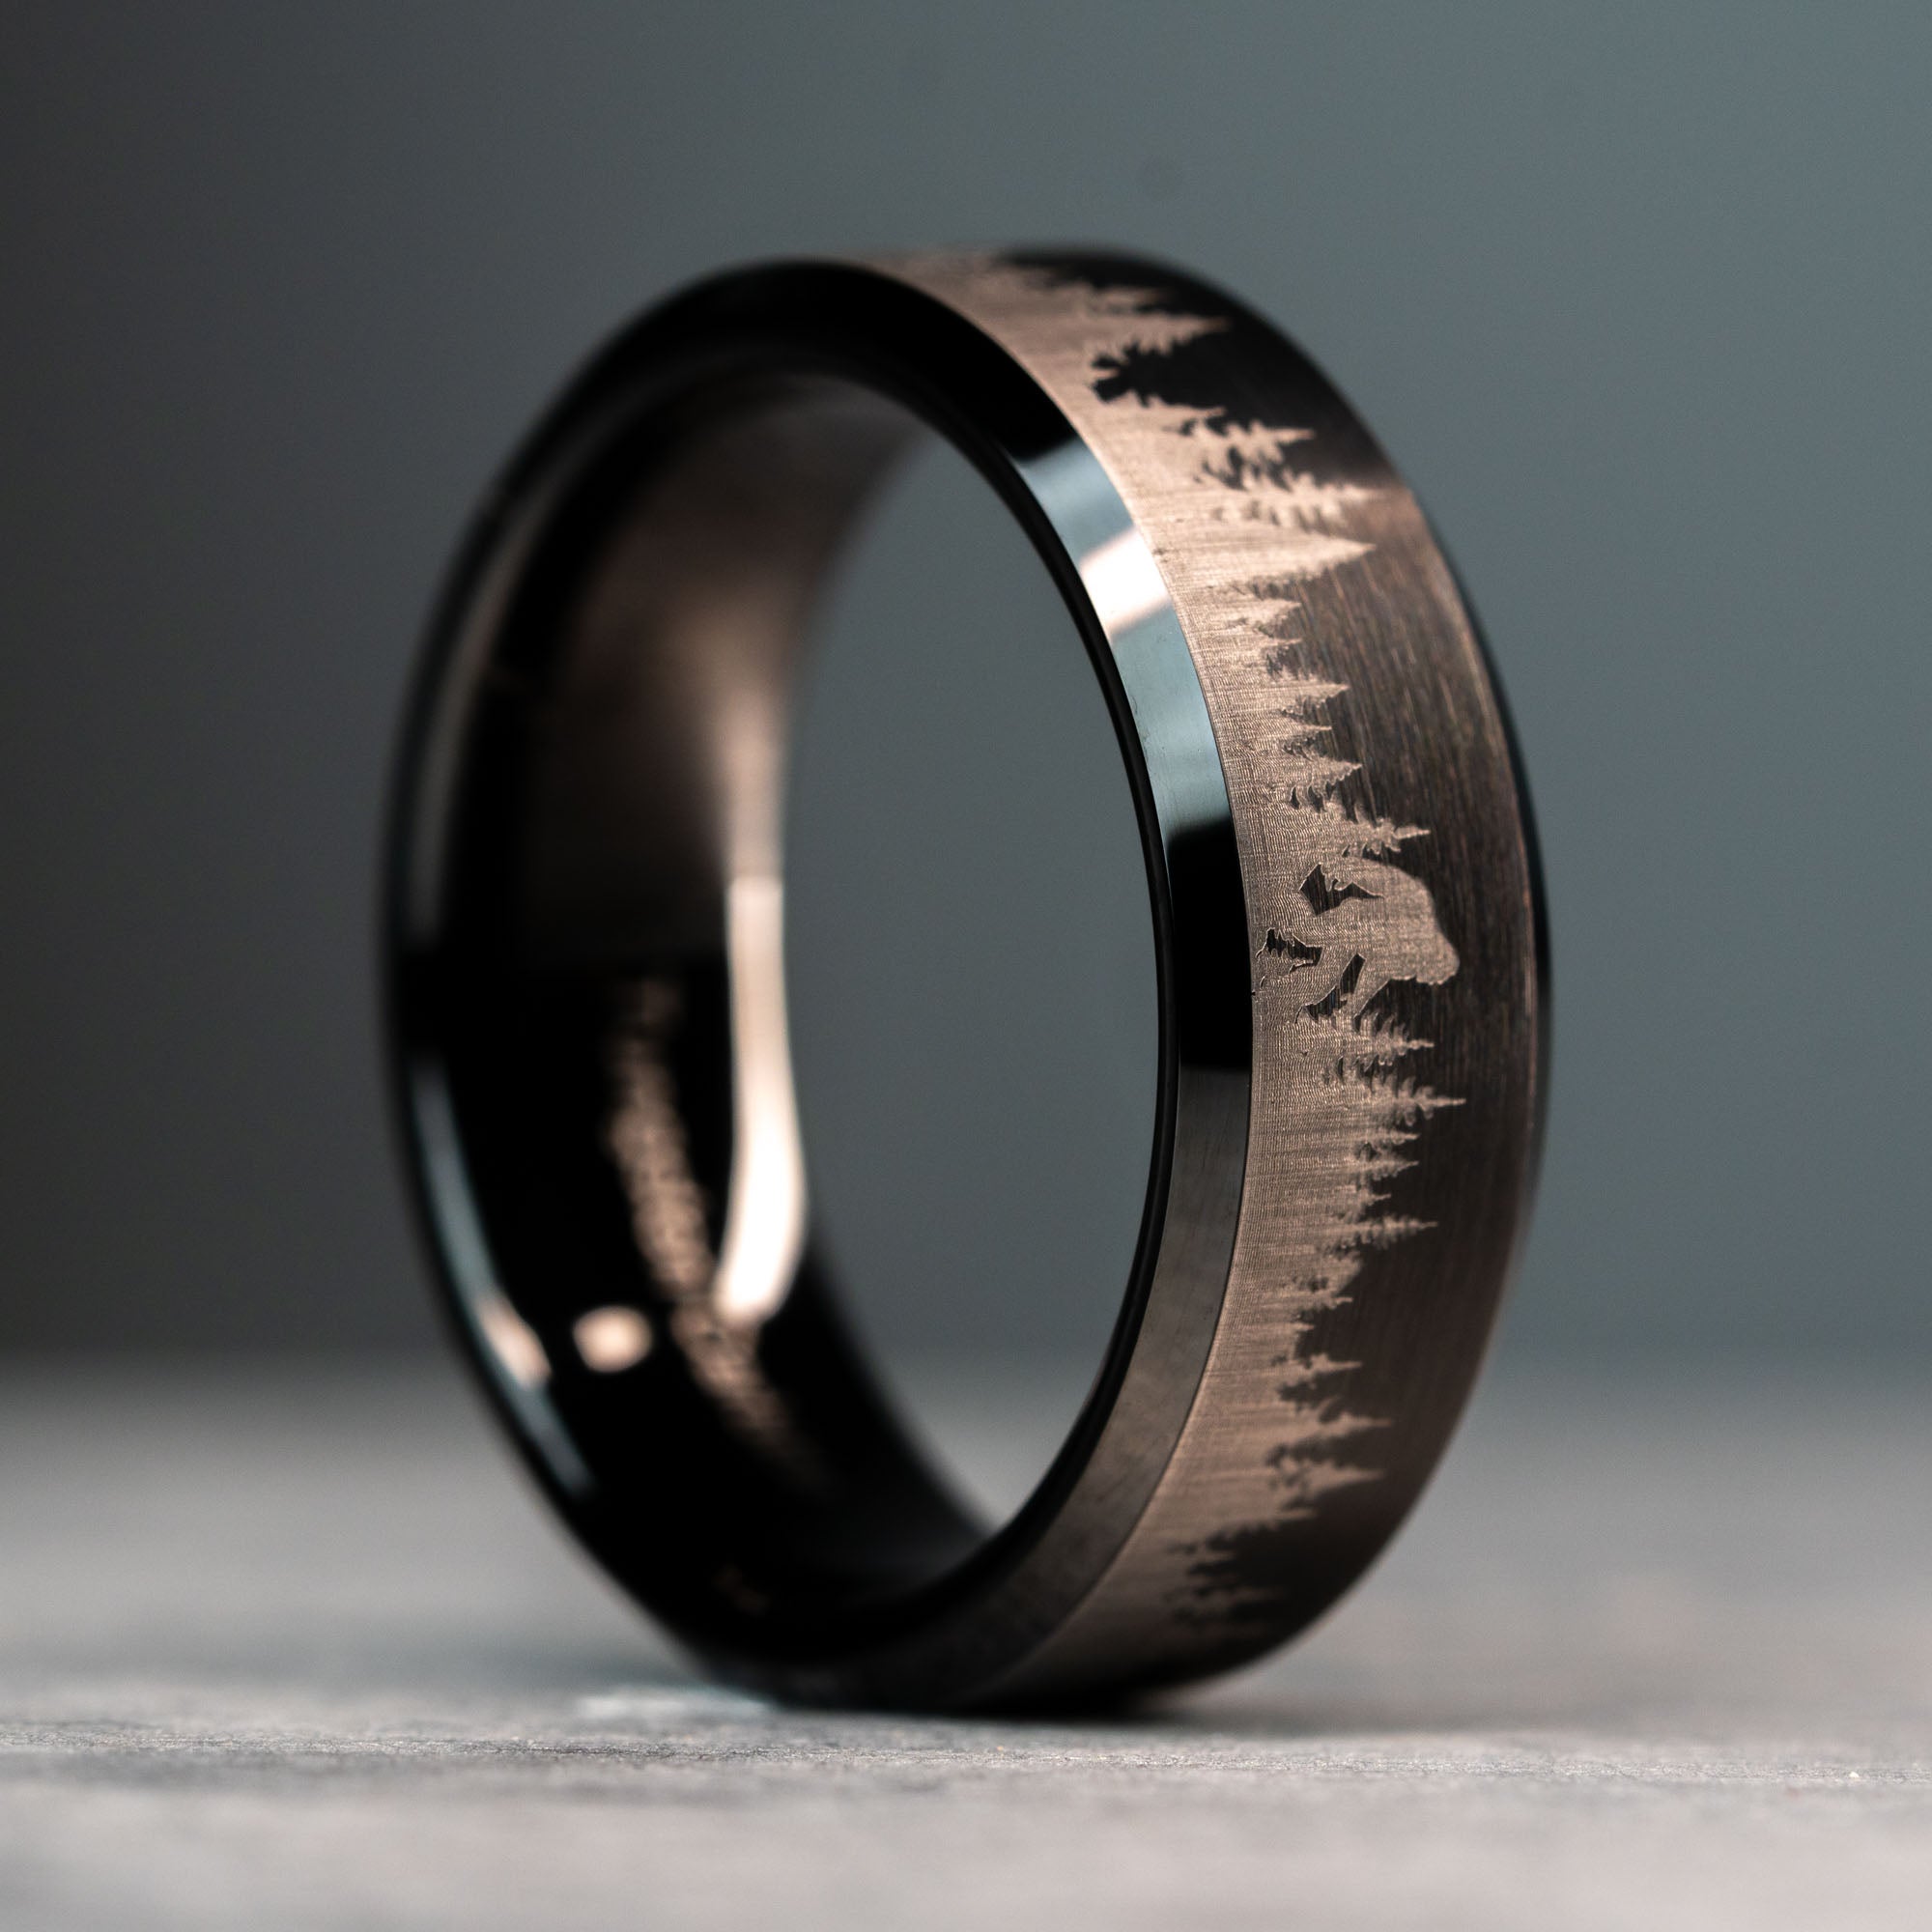 Black Beveled Tungsten Engraved Sasquatch Sighting Ring